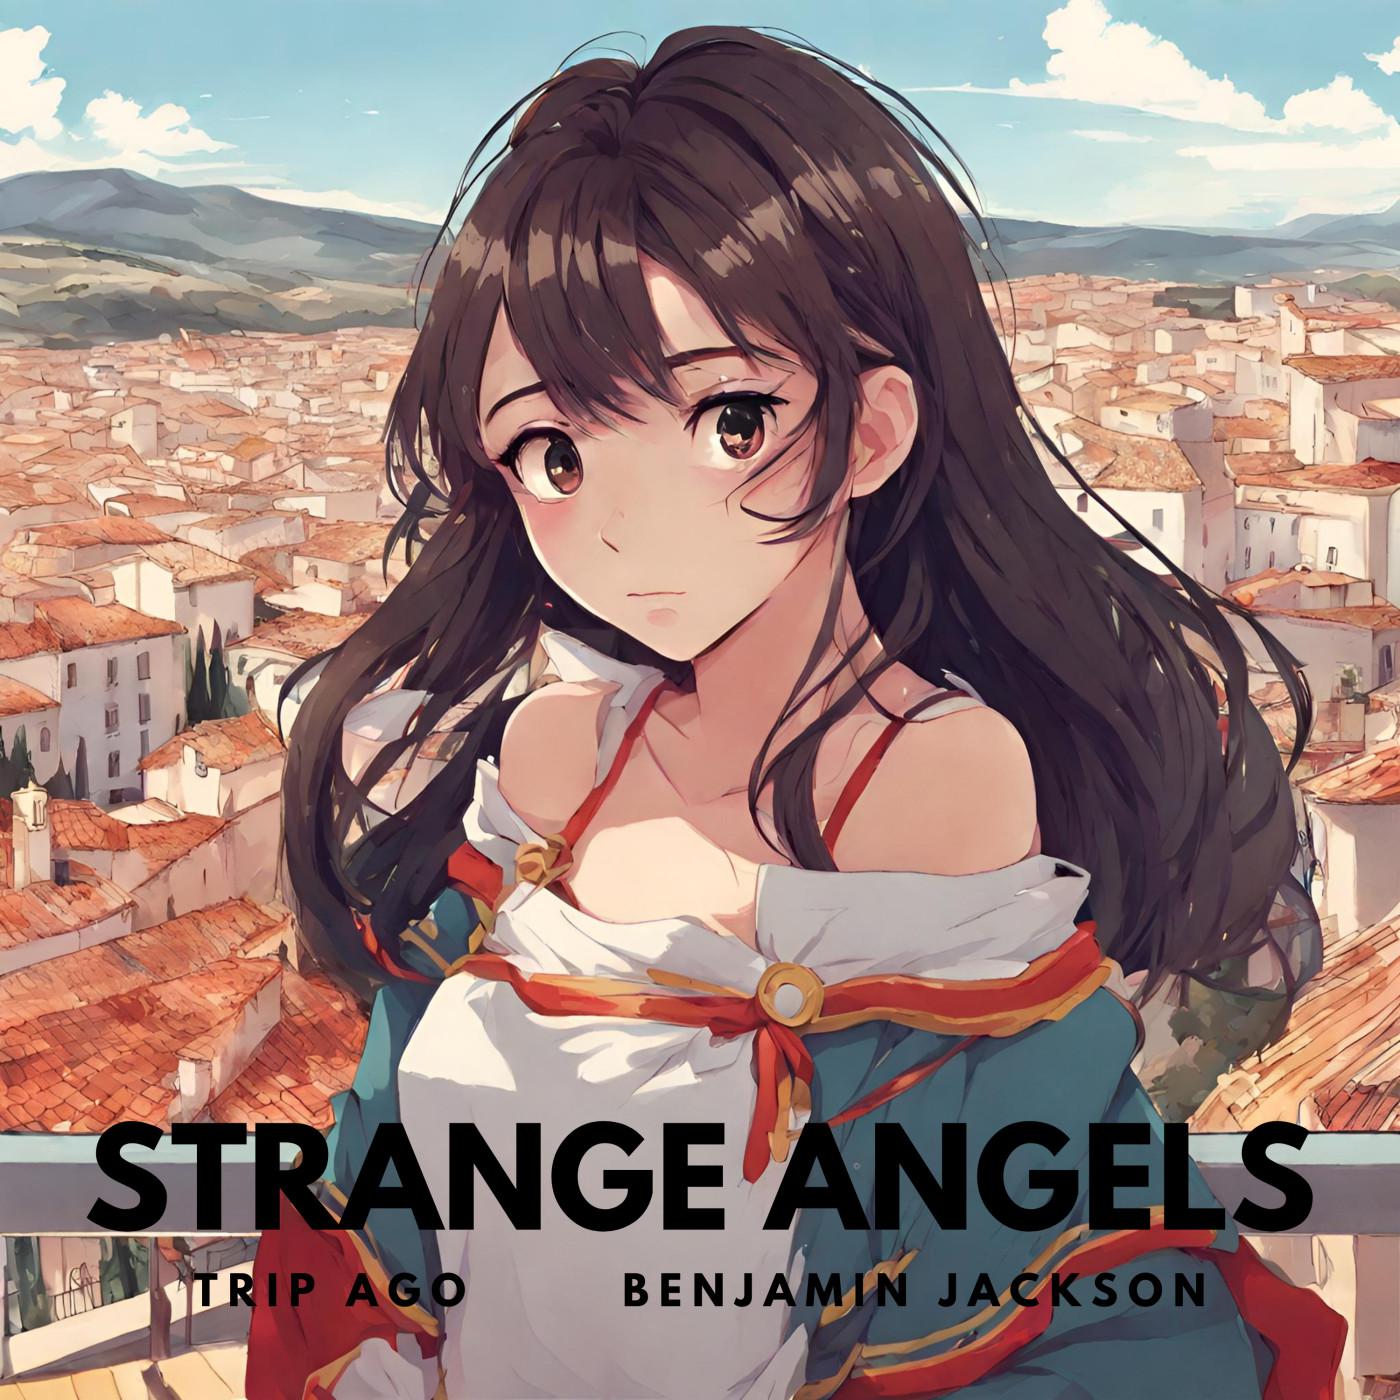 Trip Ago - Strange Angels (feat. Benjamin Jackson)